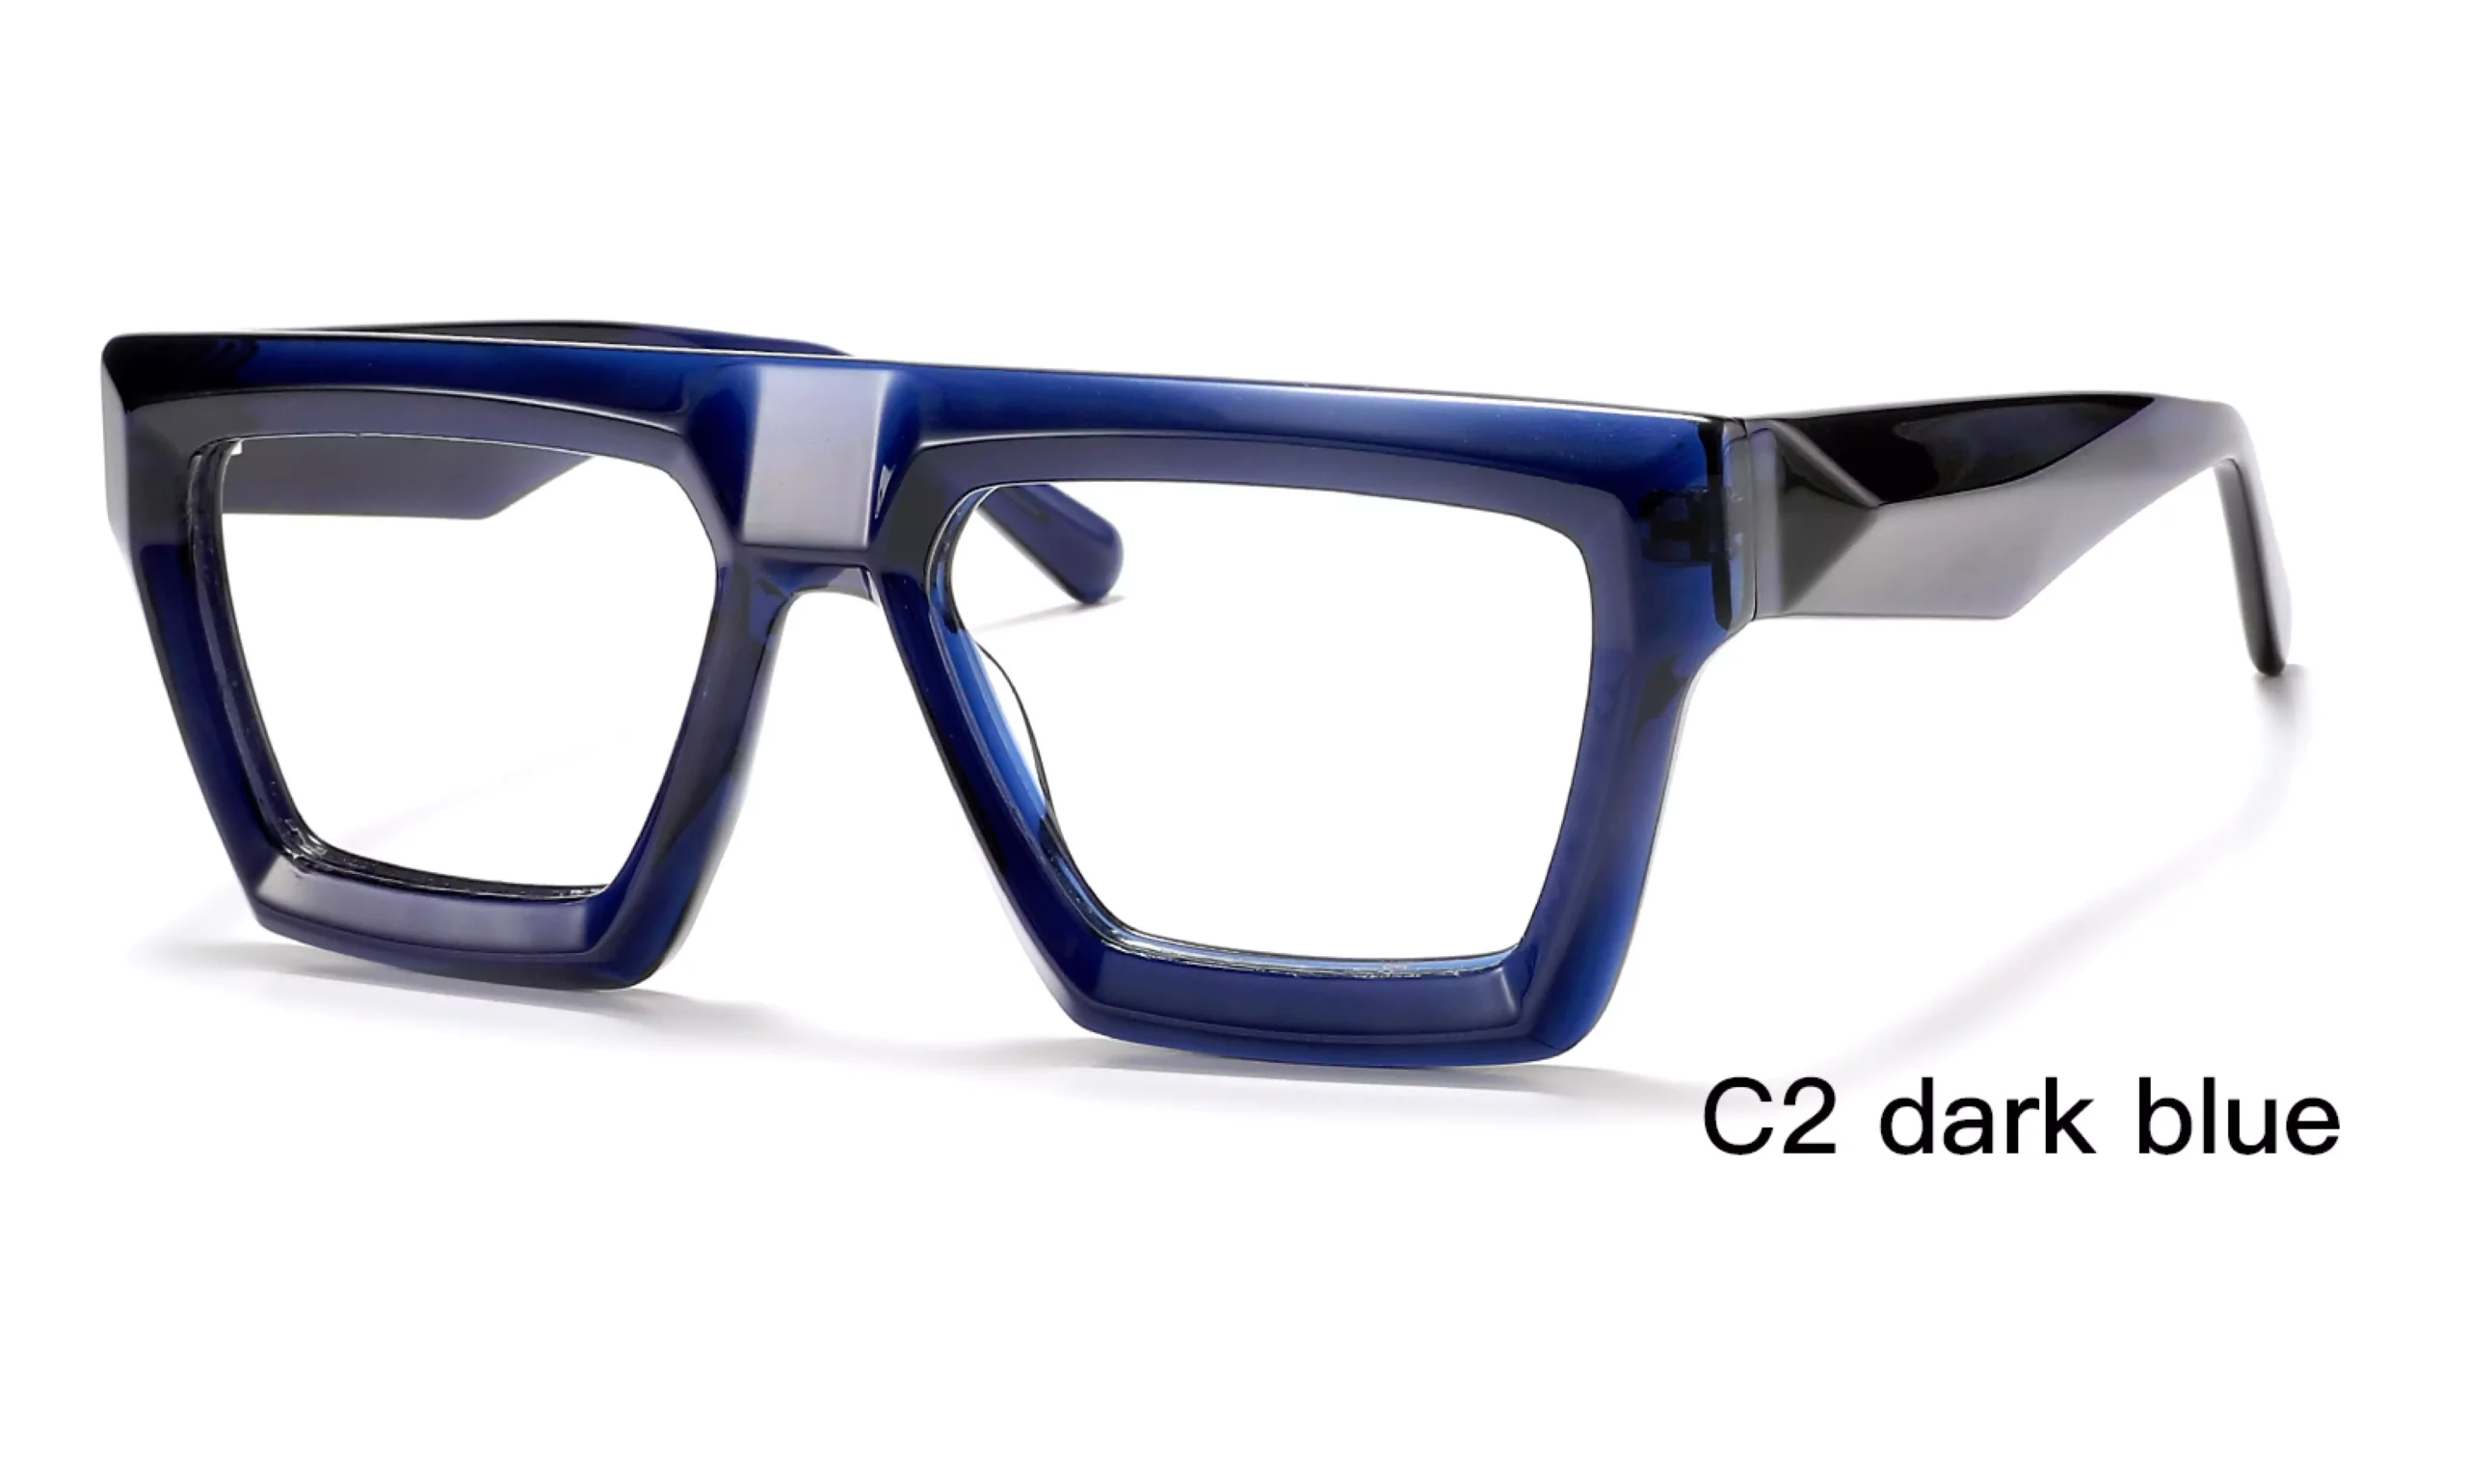 dark blue glasses frame, wholesale, square, stereoscopic replica eyeglasses, made in China, Ouyuan Eyewear